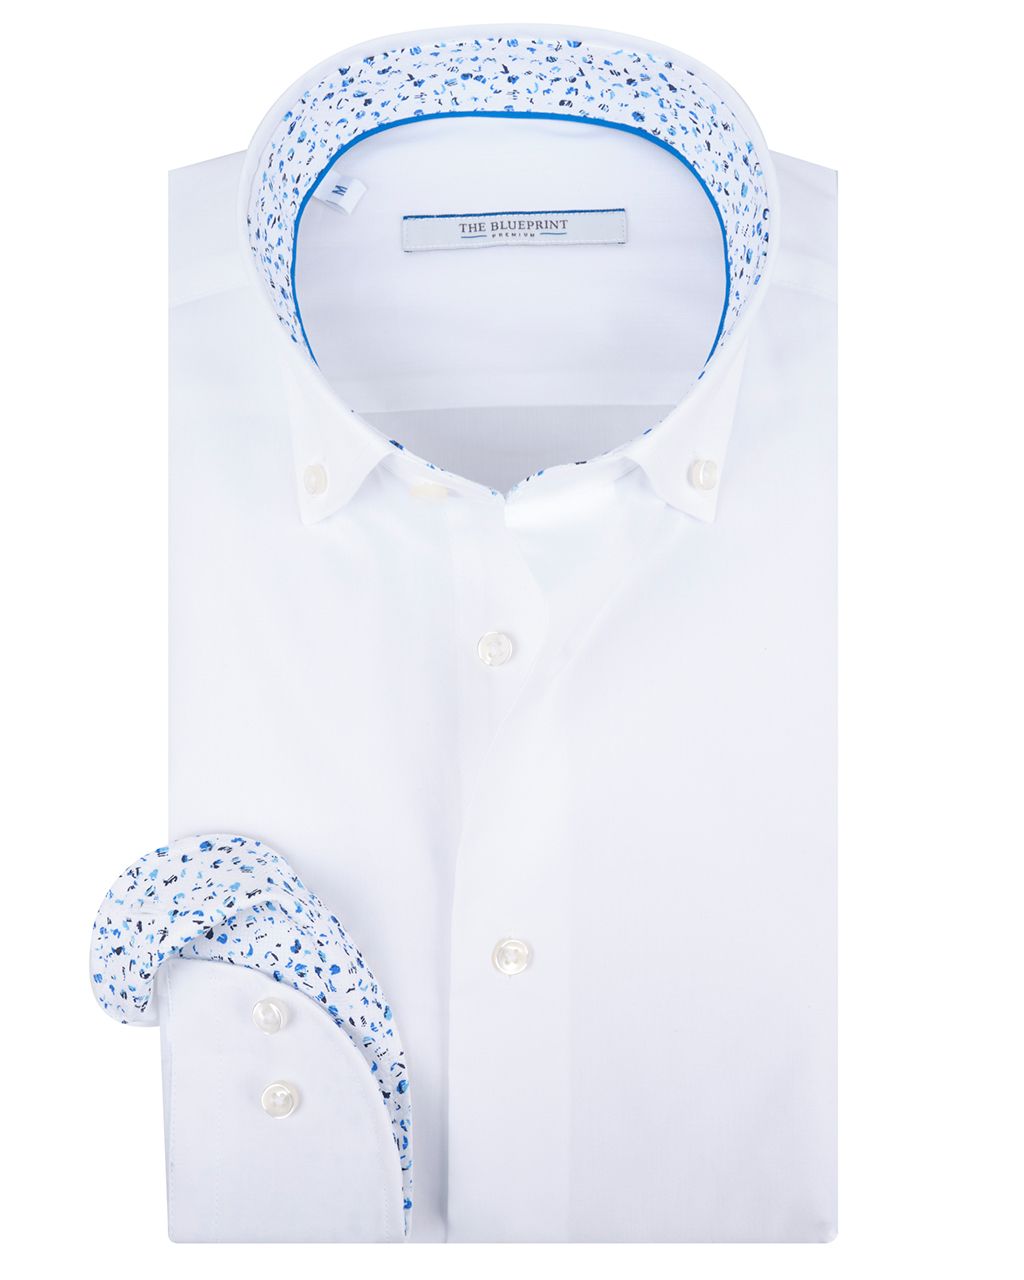 The BLUEPRINT Premium Trendy Overhemd LM Wit uni 078477-001-L